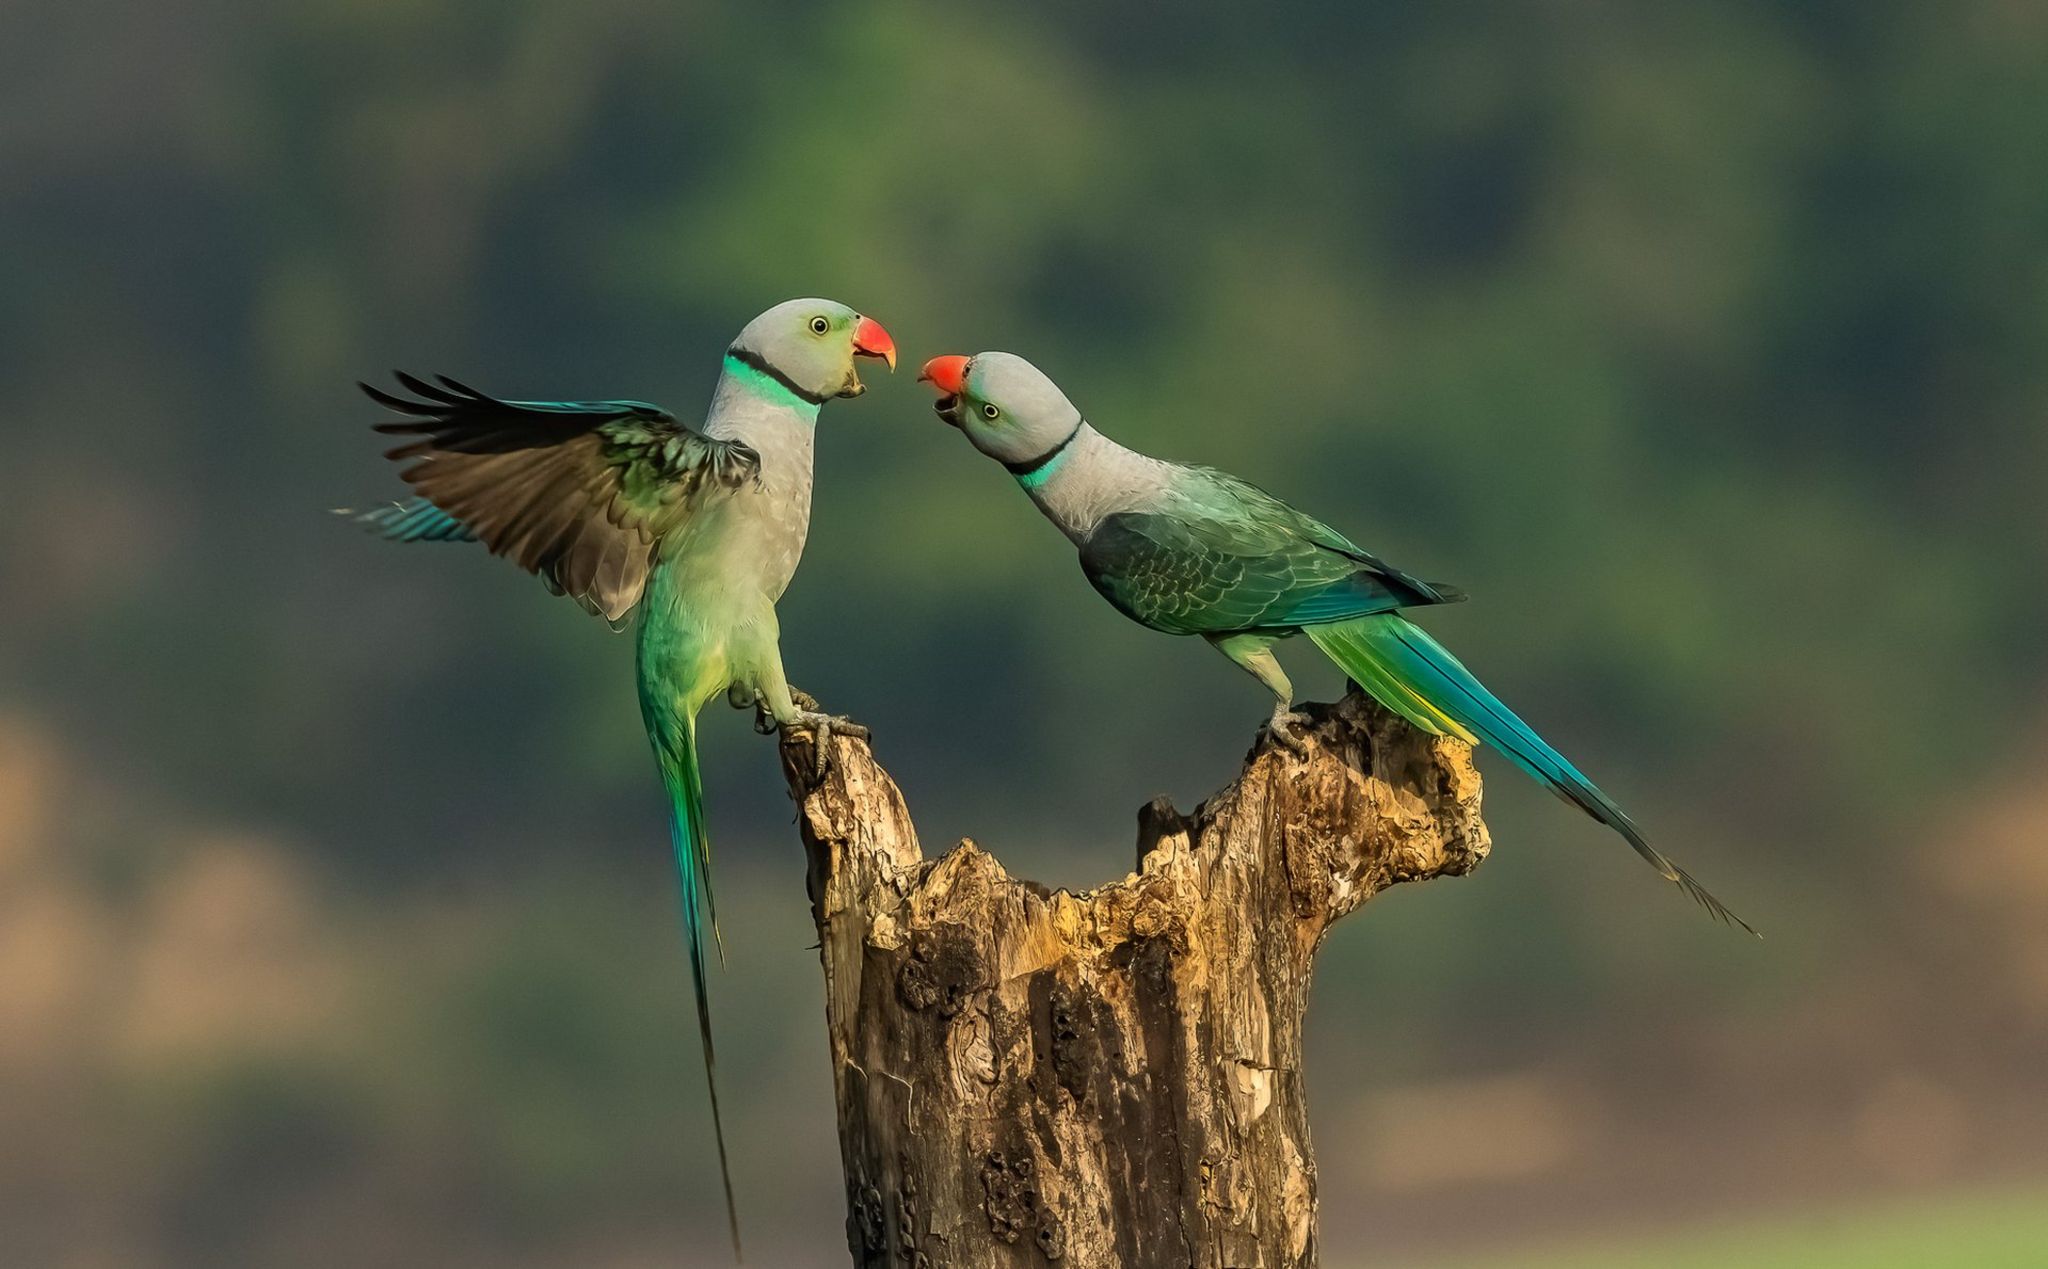 Two Malabar parrots fighting in Karnataka, India.